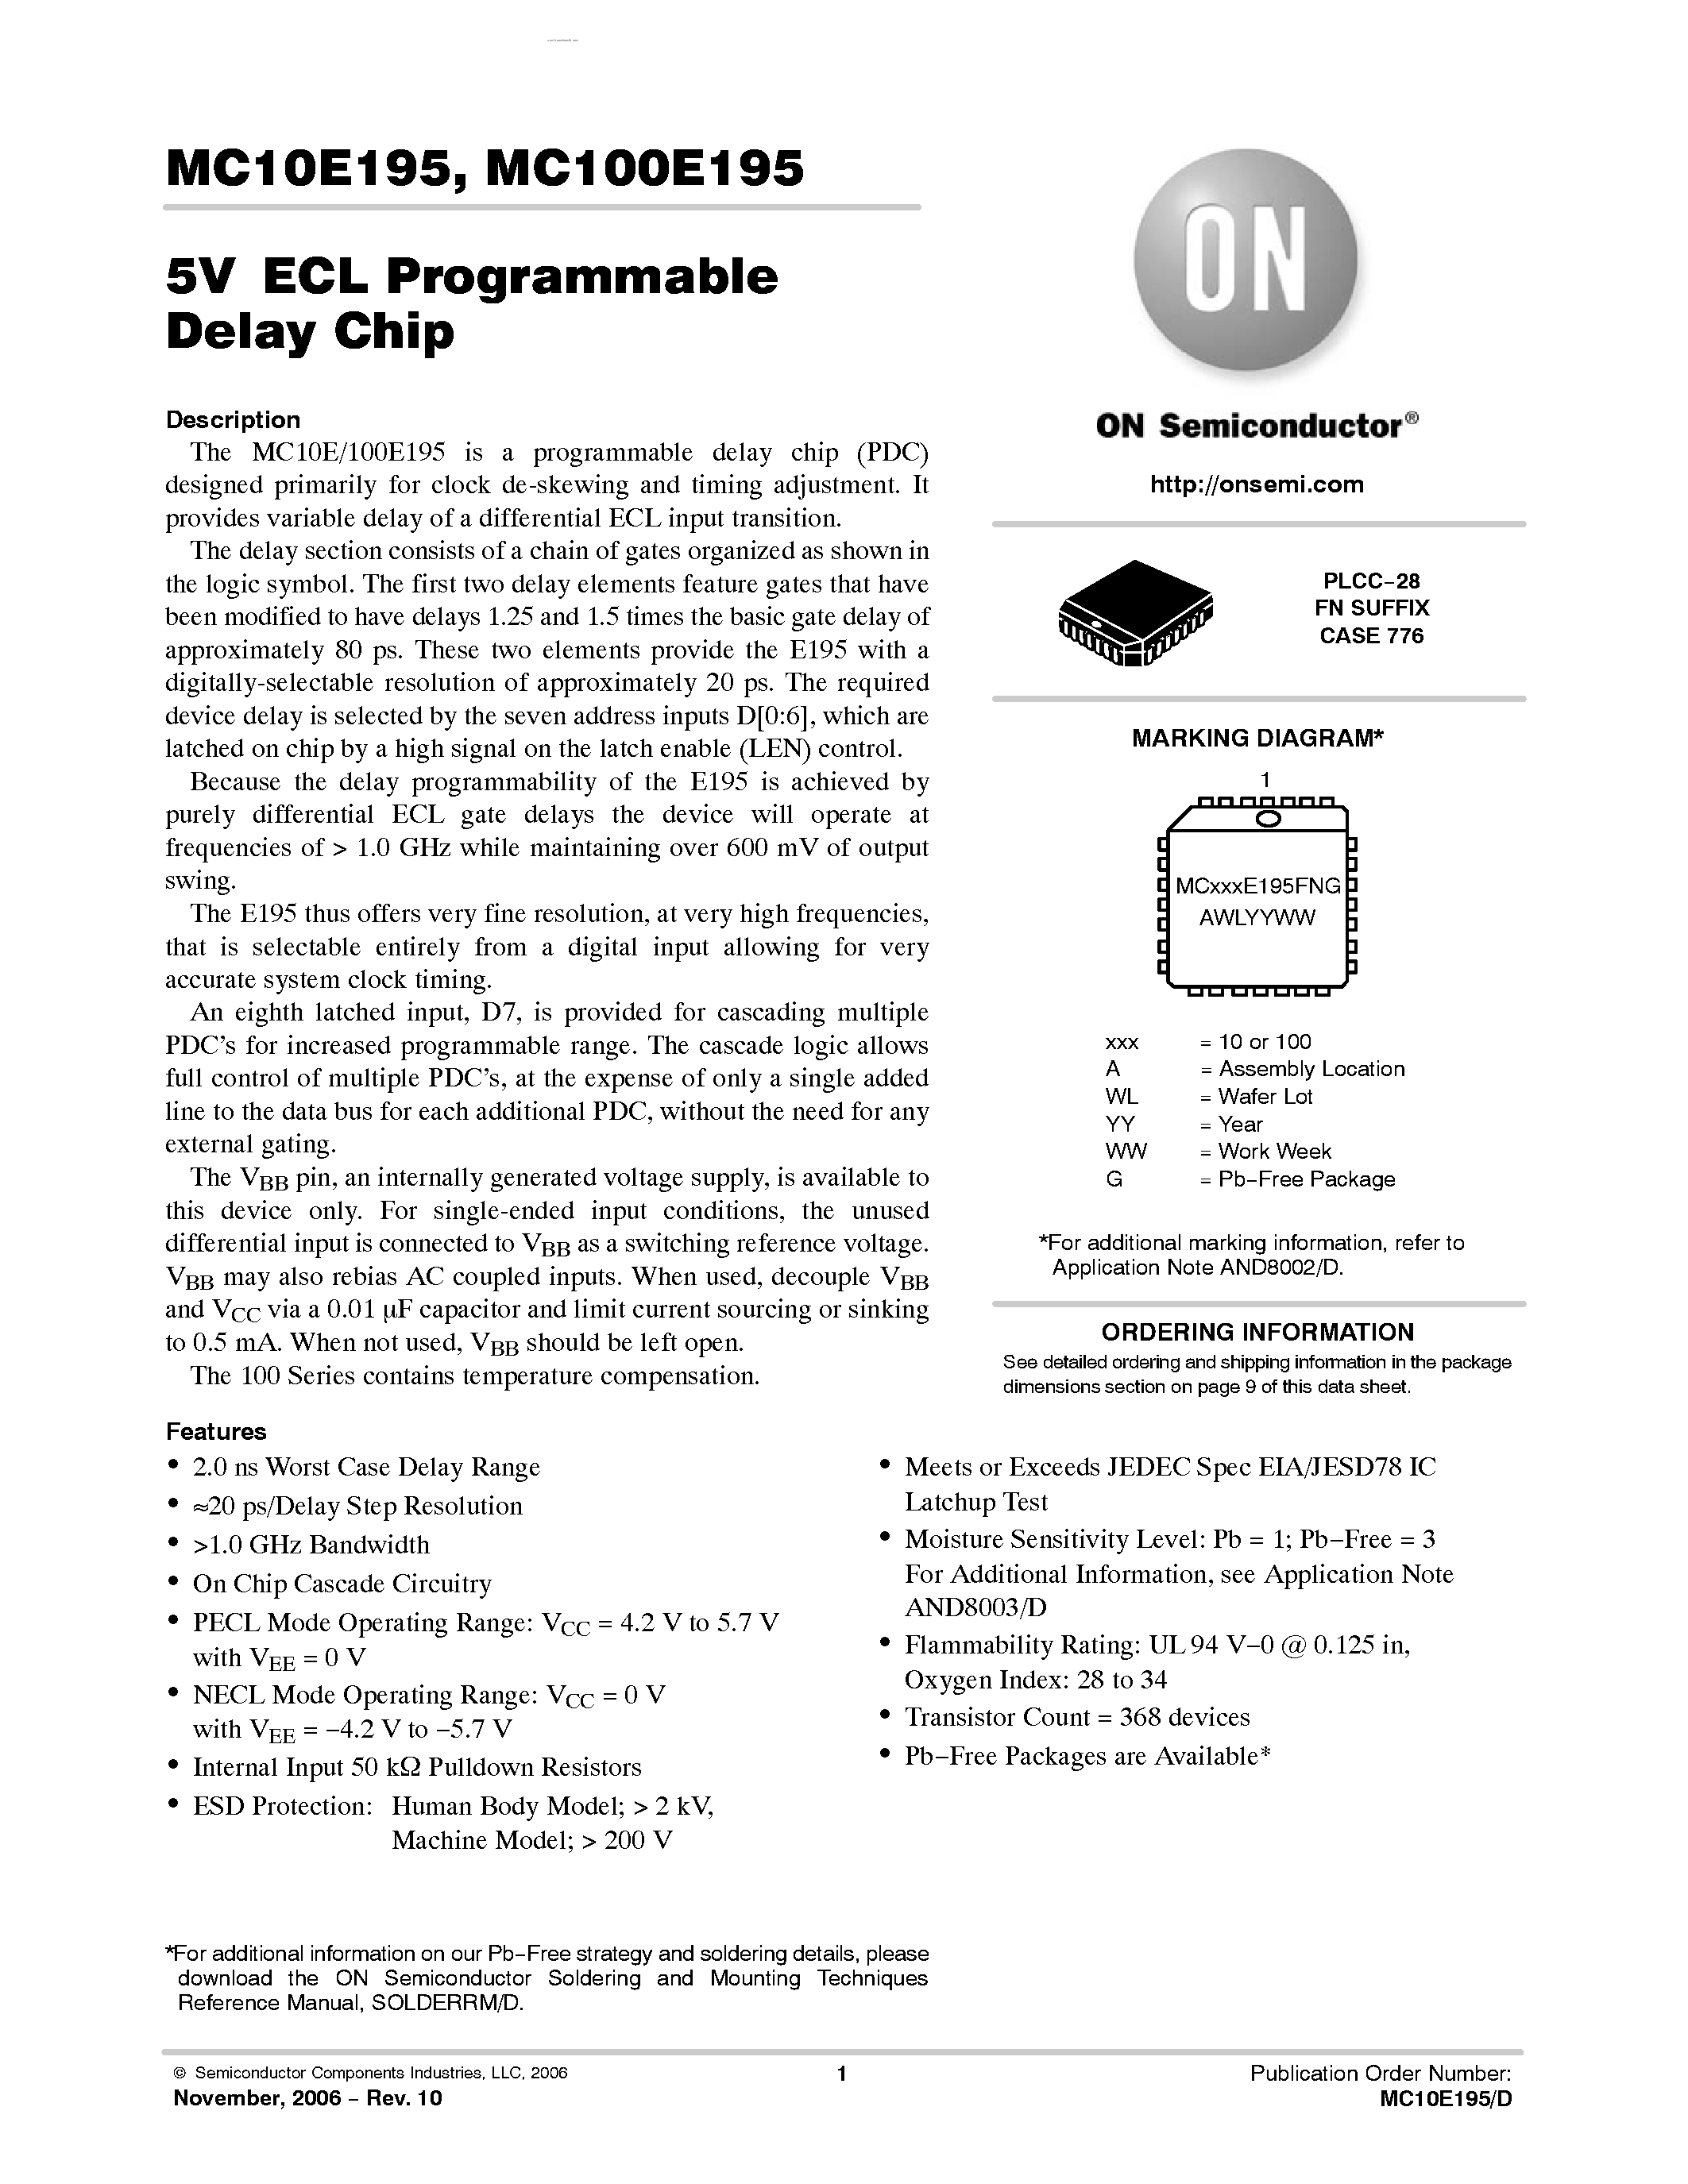 Datasheet MC100E195 - PROGRAMMABLE DELAY CHIP page 1